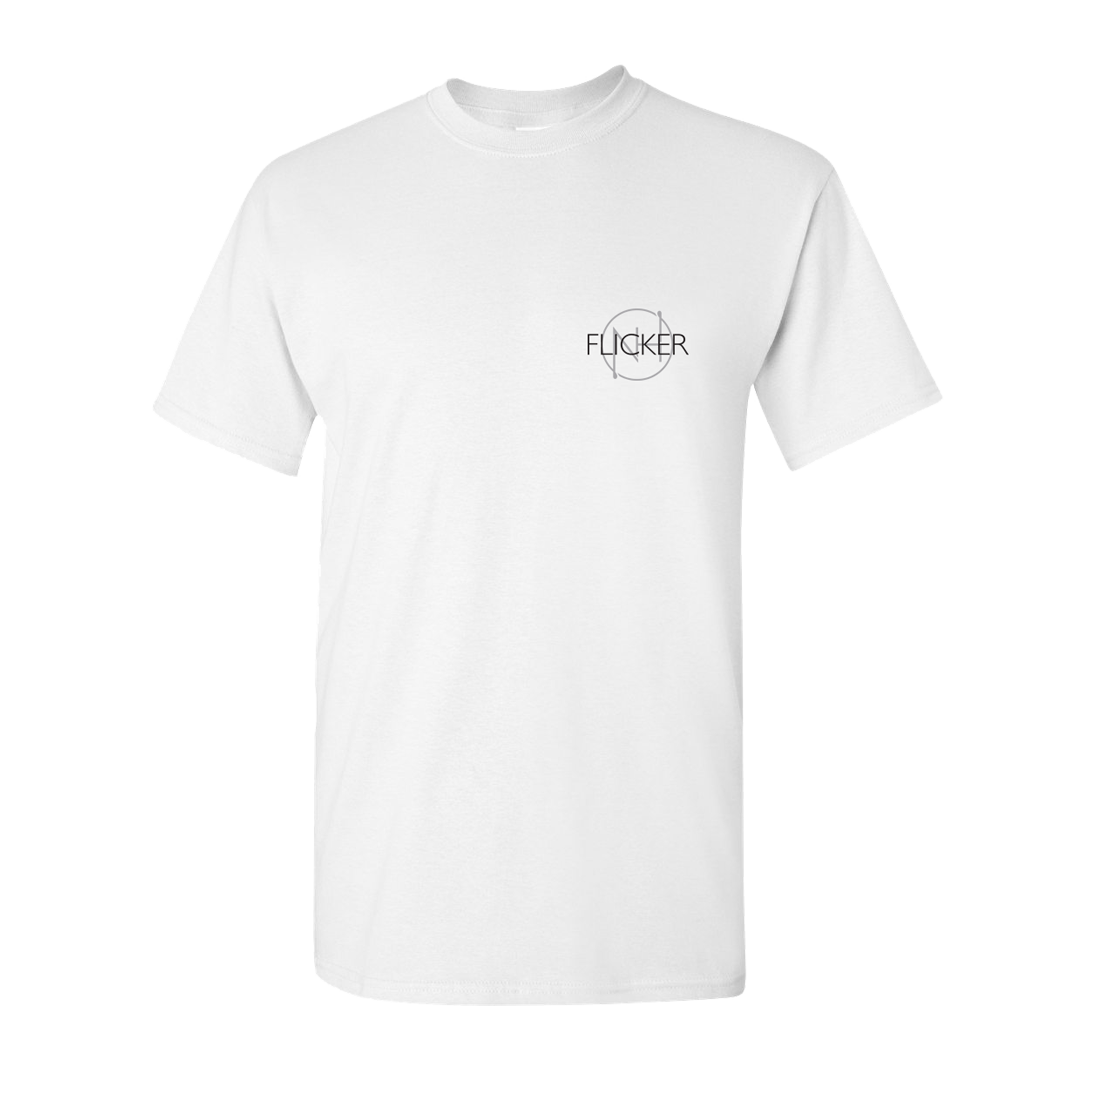 Niall Horan - White 'Flicker' Print Exclusive T-shirt